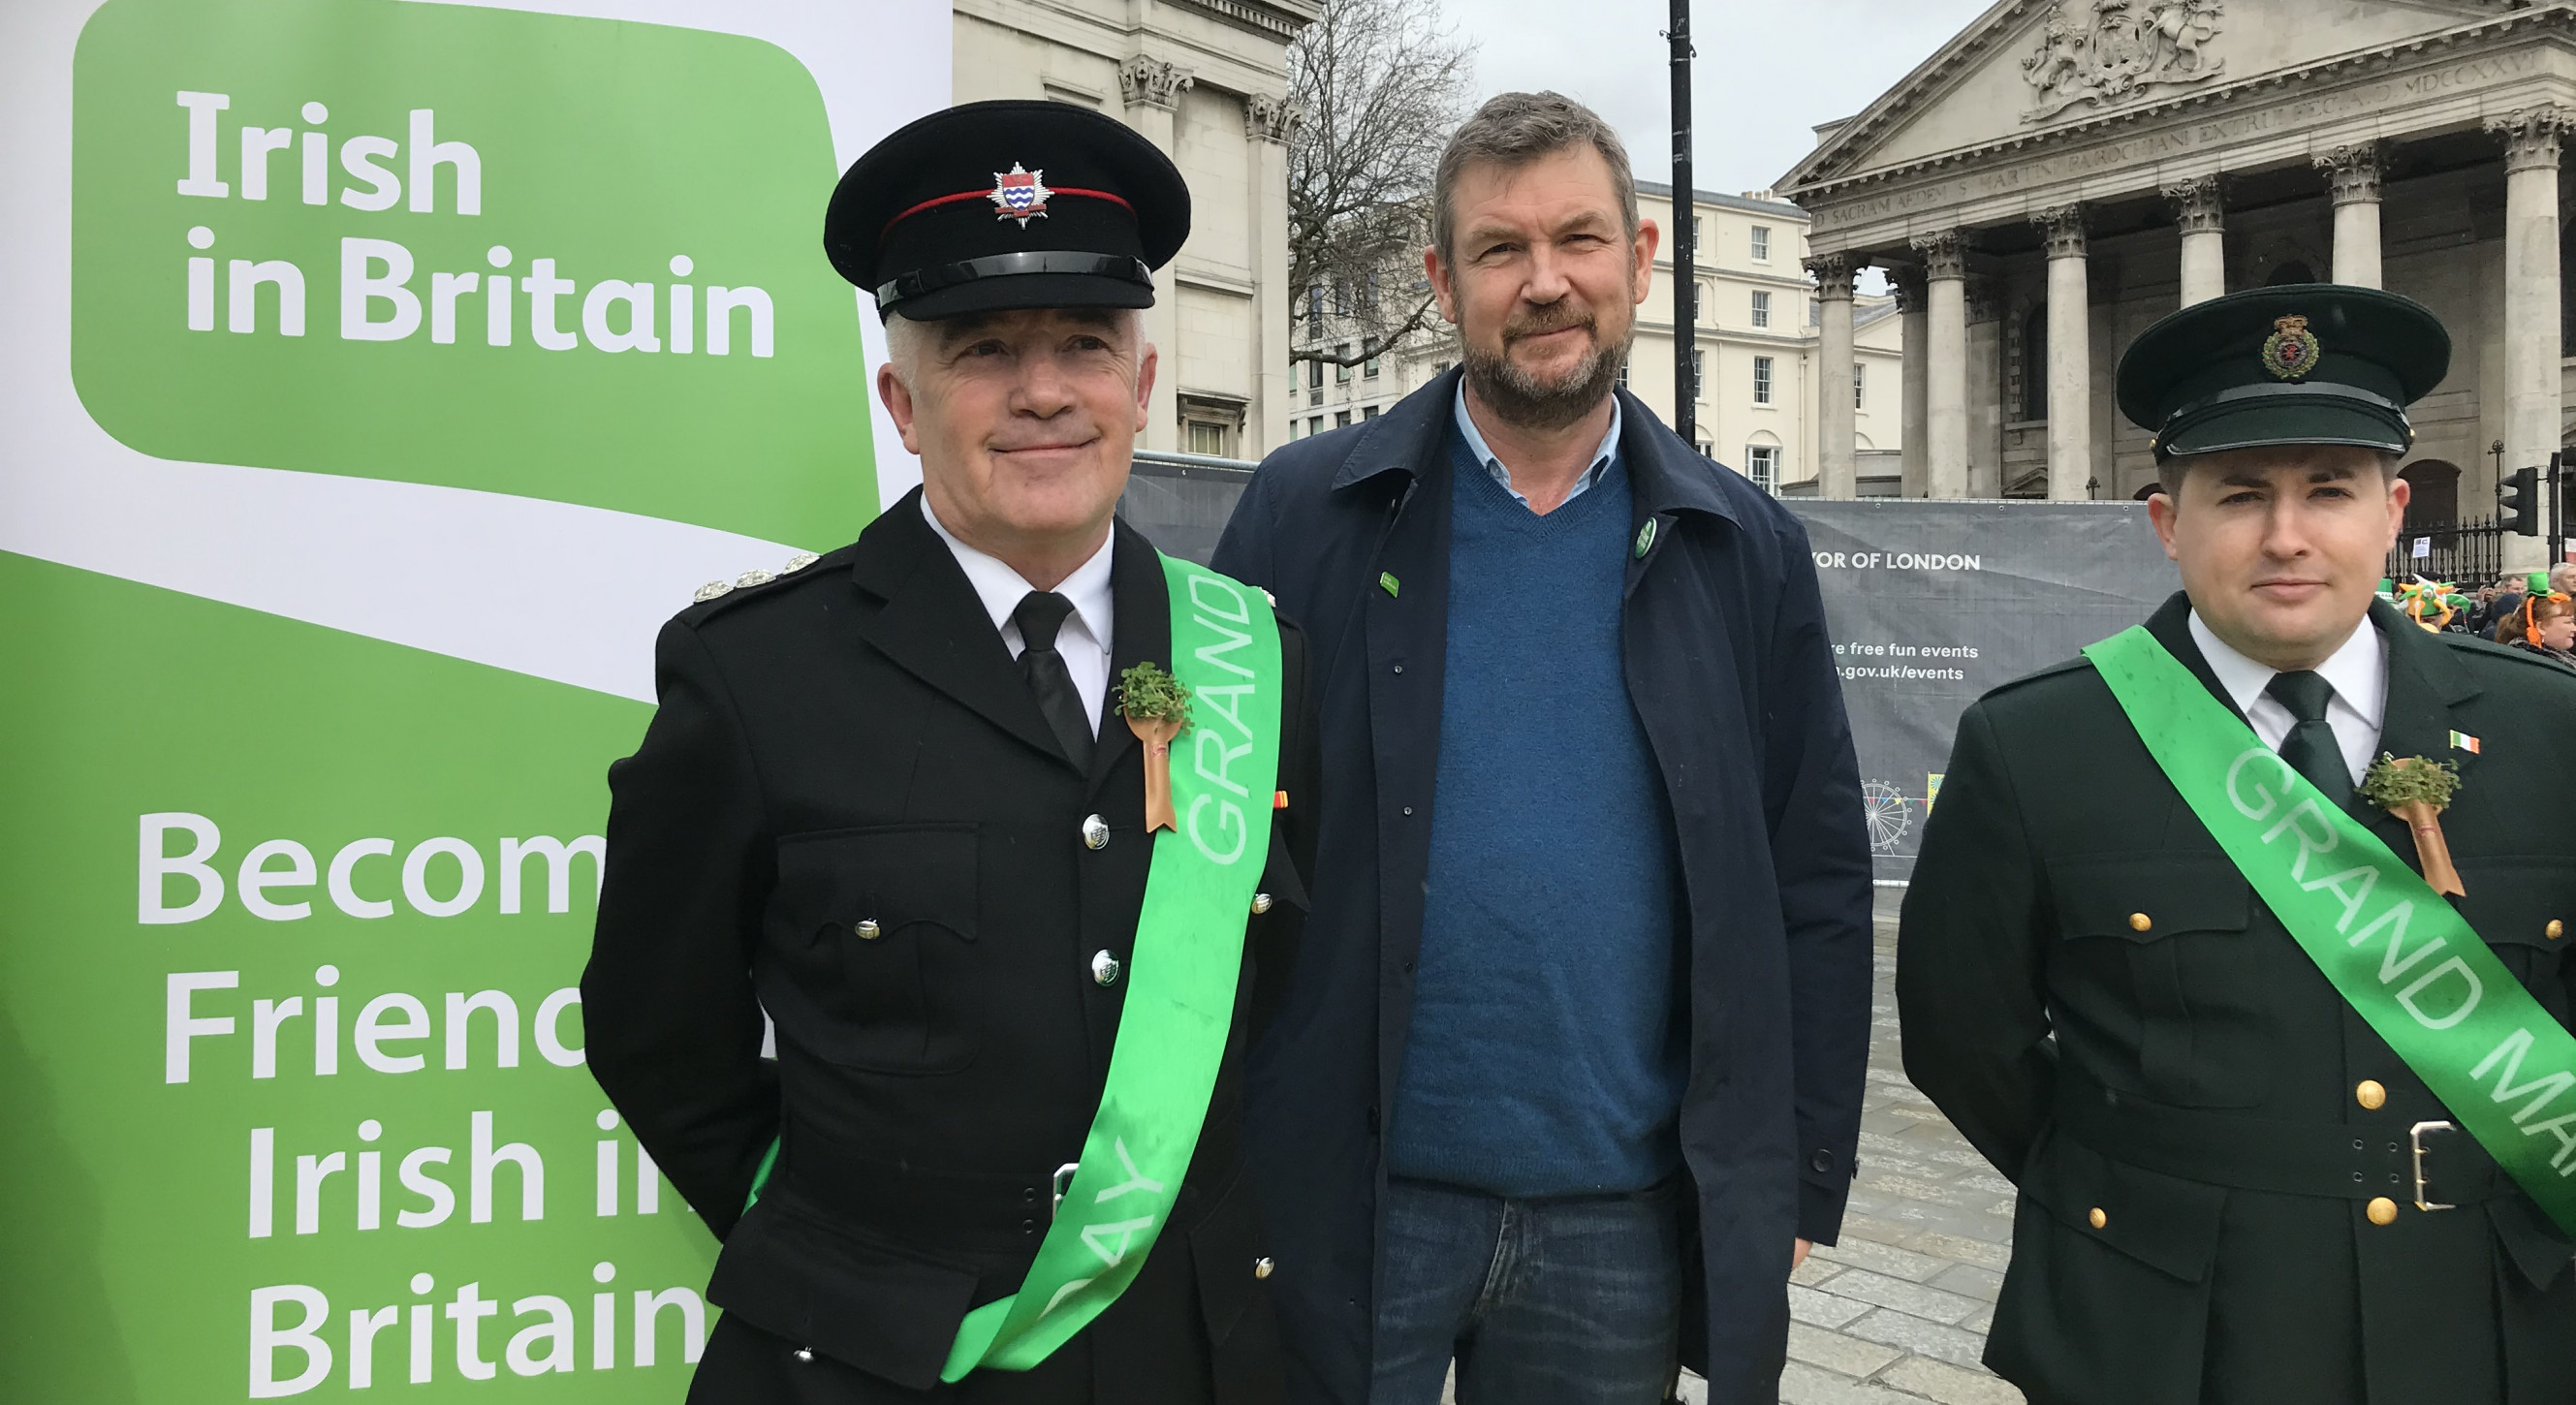 Grand Marshals Brien O'Keefe, Station Commander, London Fire Brigade and Nathan Cahill, Paramedic, London Ambulance Service with Irish in Britain's CEO Brian Dalton.